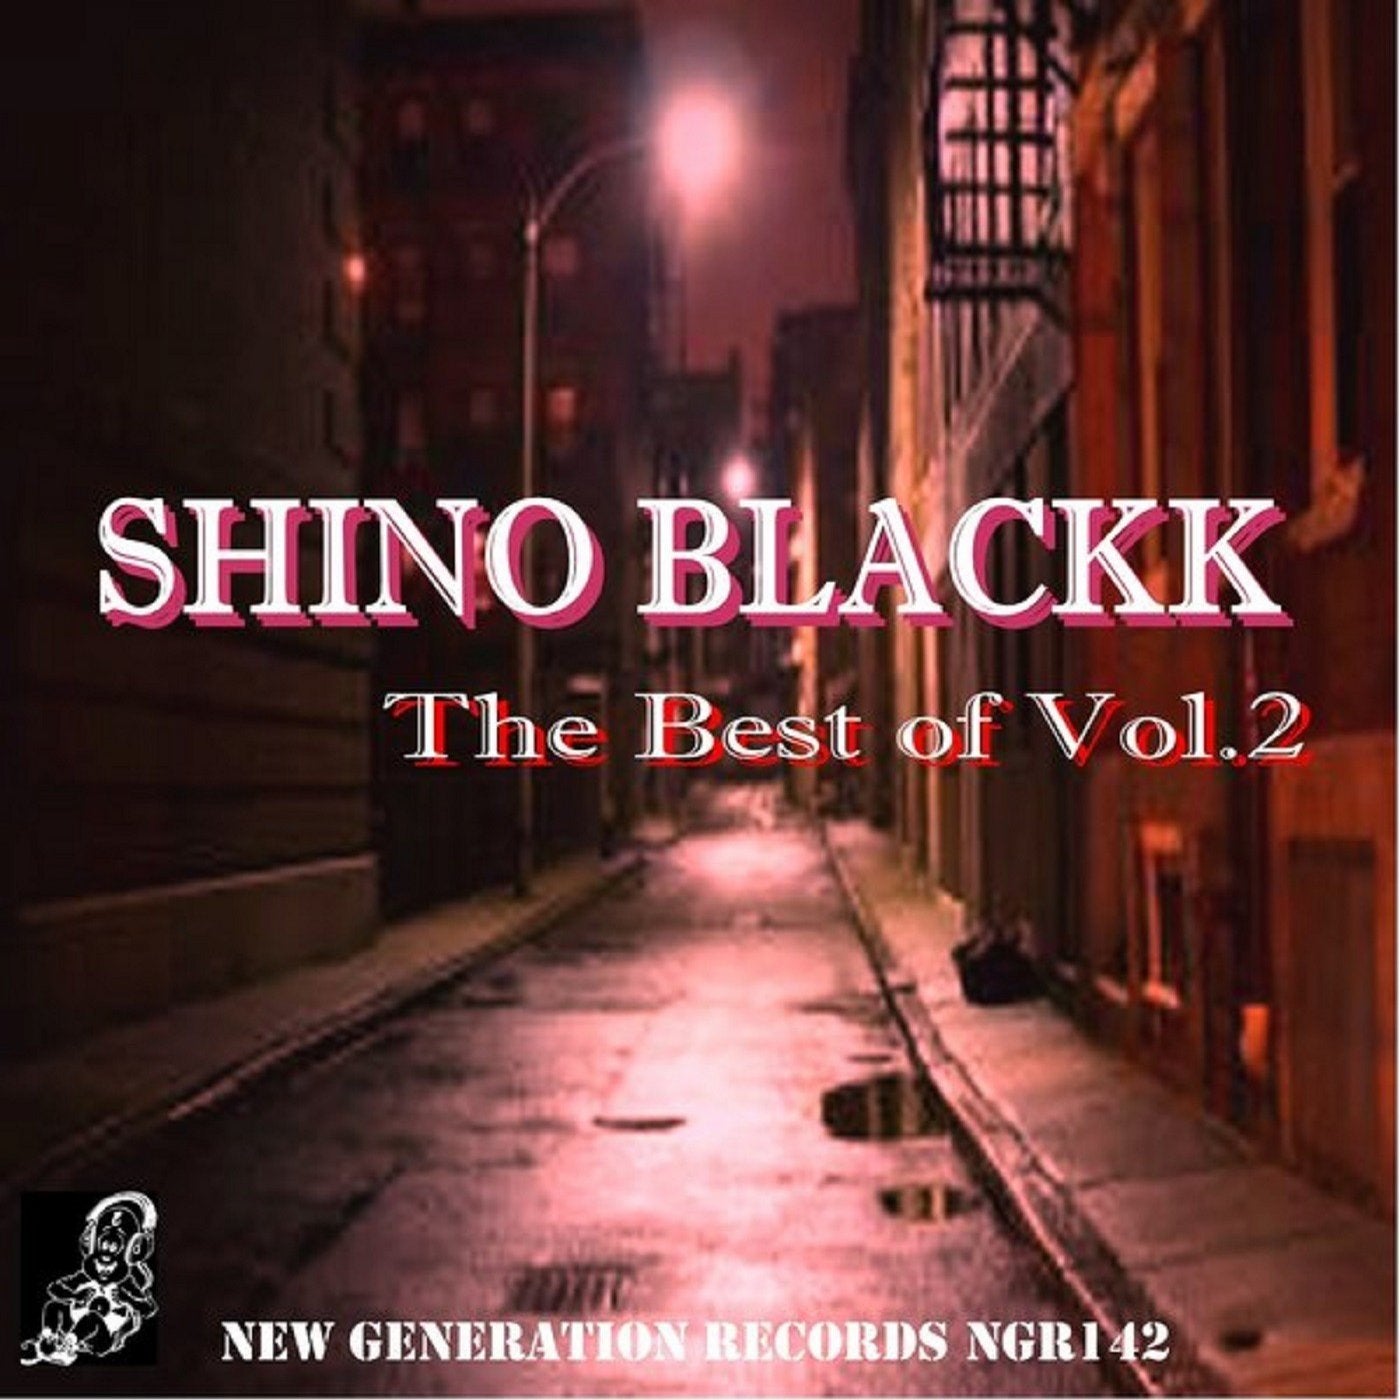 The Best Of Shino Blackk, Vol. 2